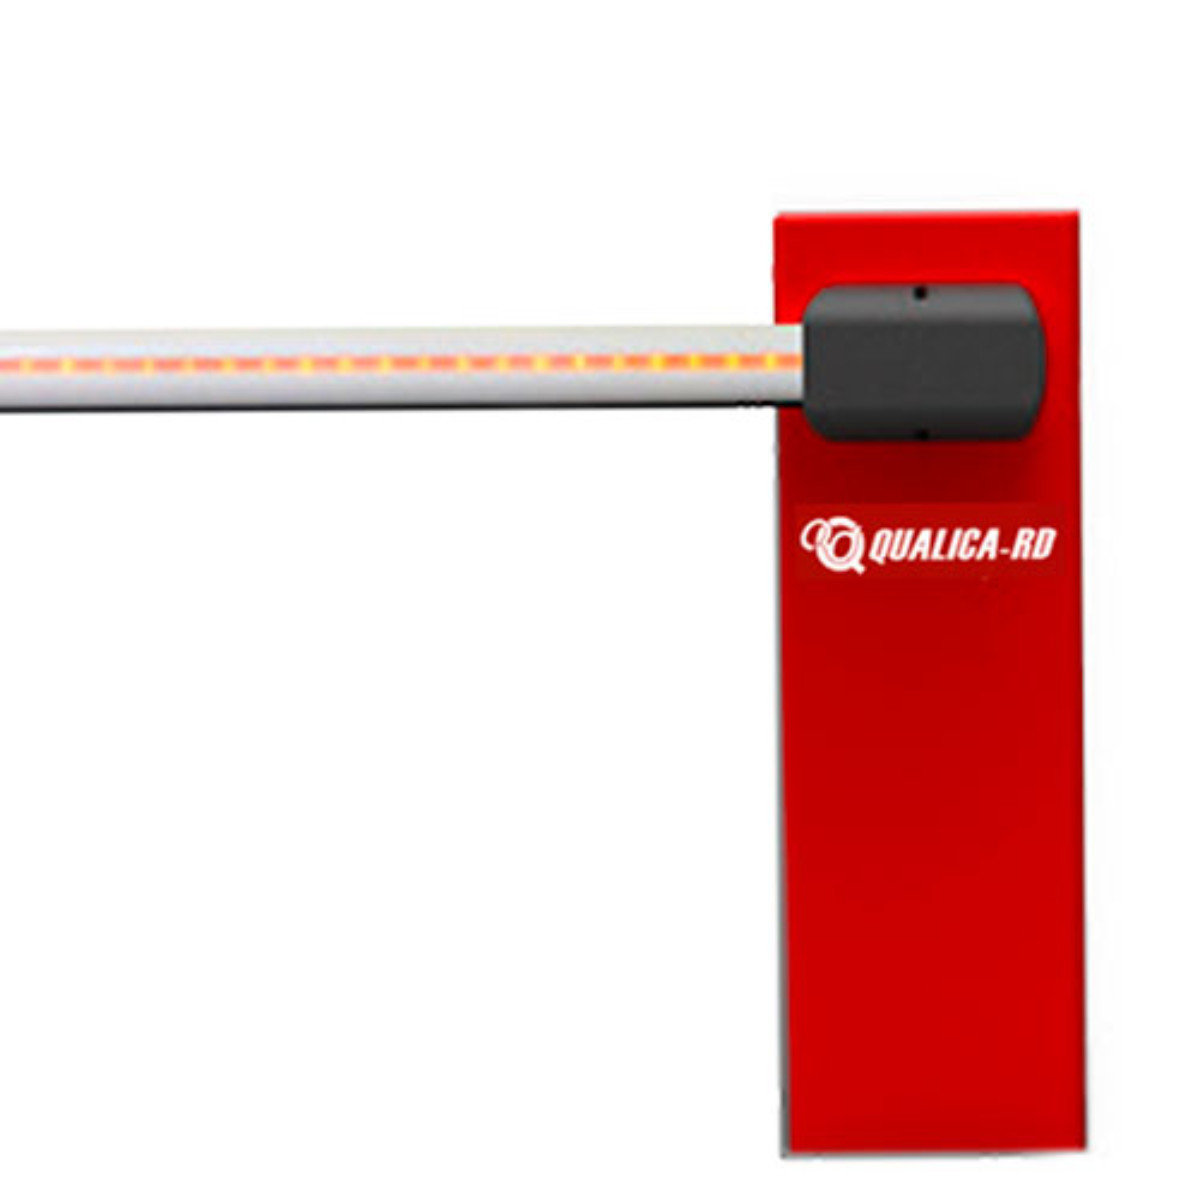 Barrera automática parking CLEMSA AP324C para mástiles de hasta 3m